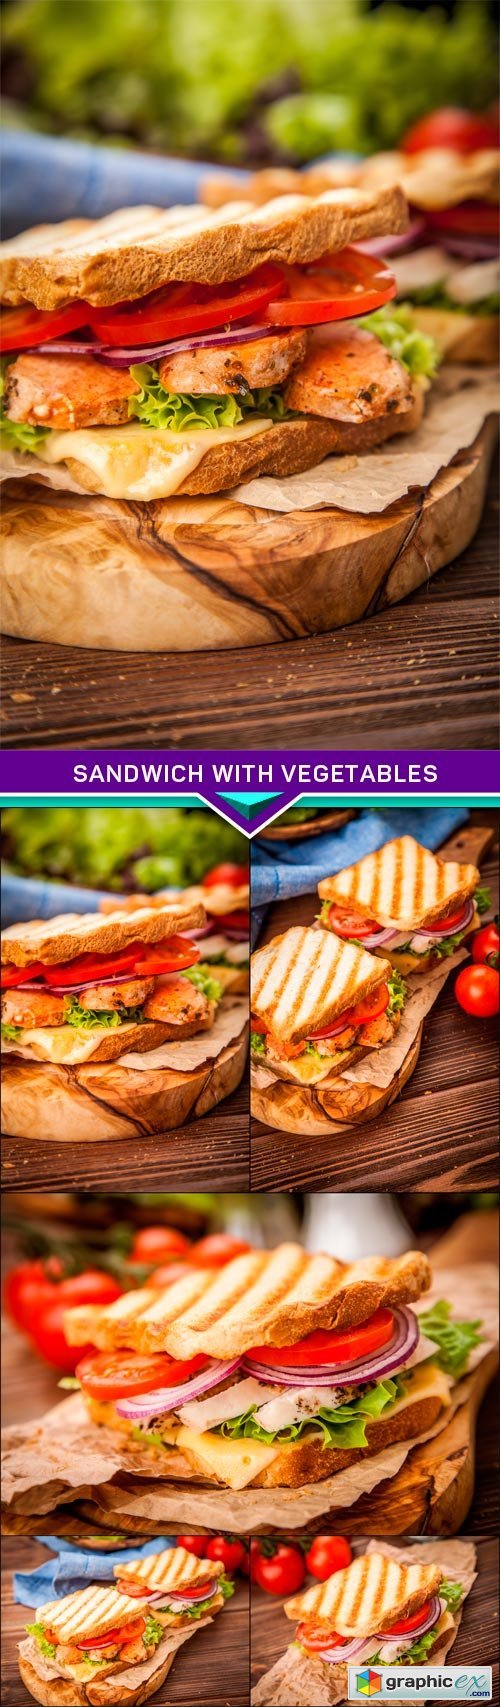 Sandwich with vegetables 5x JPEG